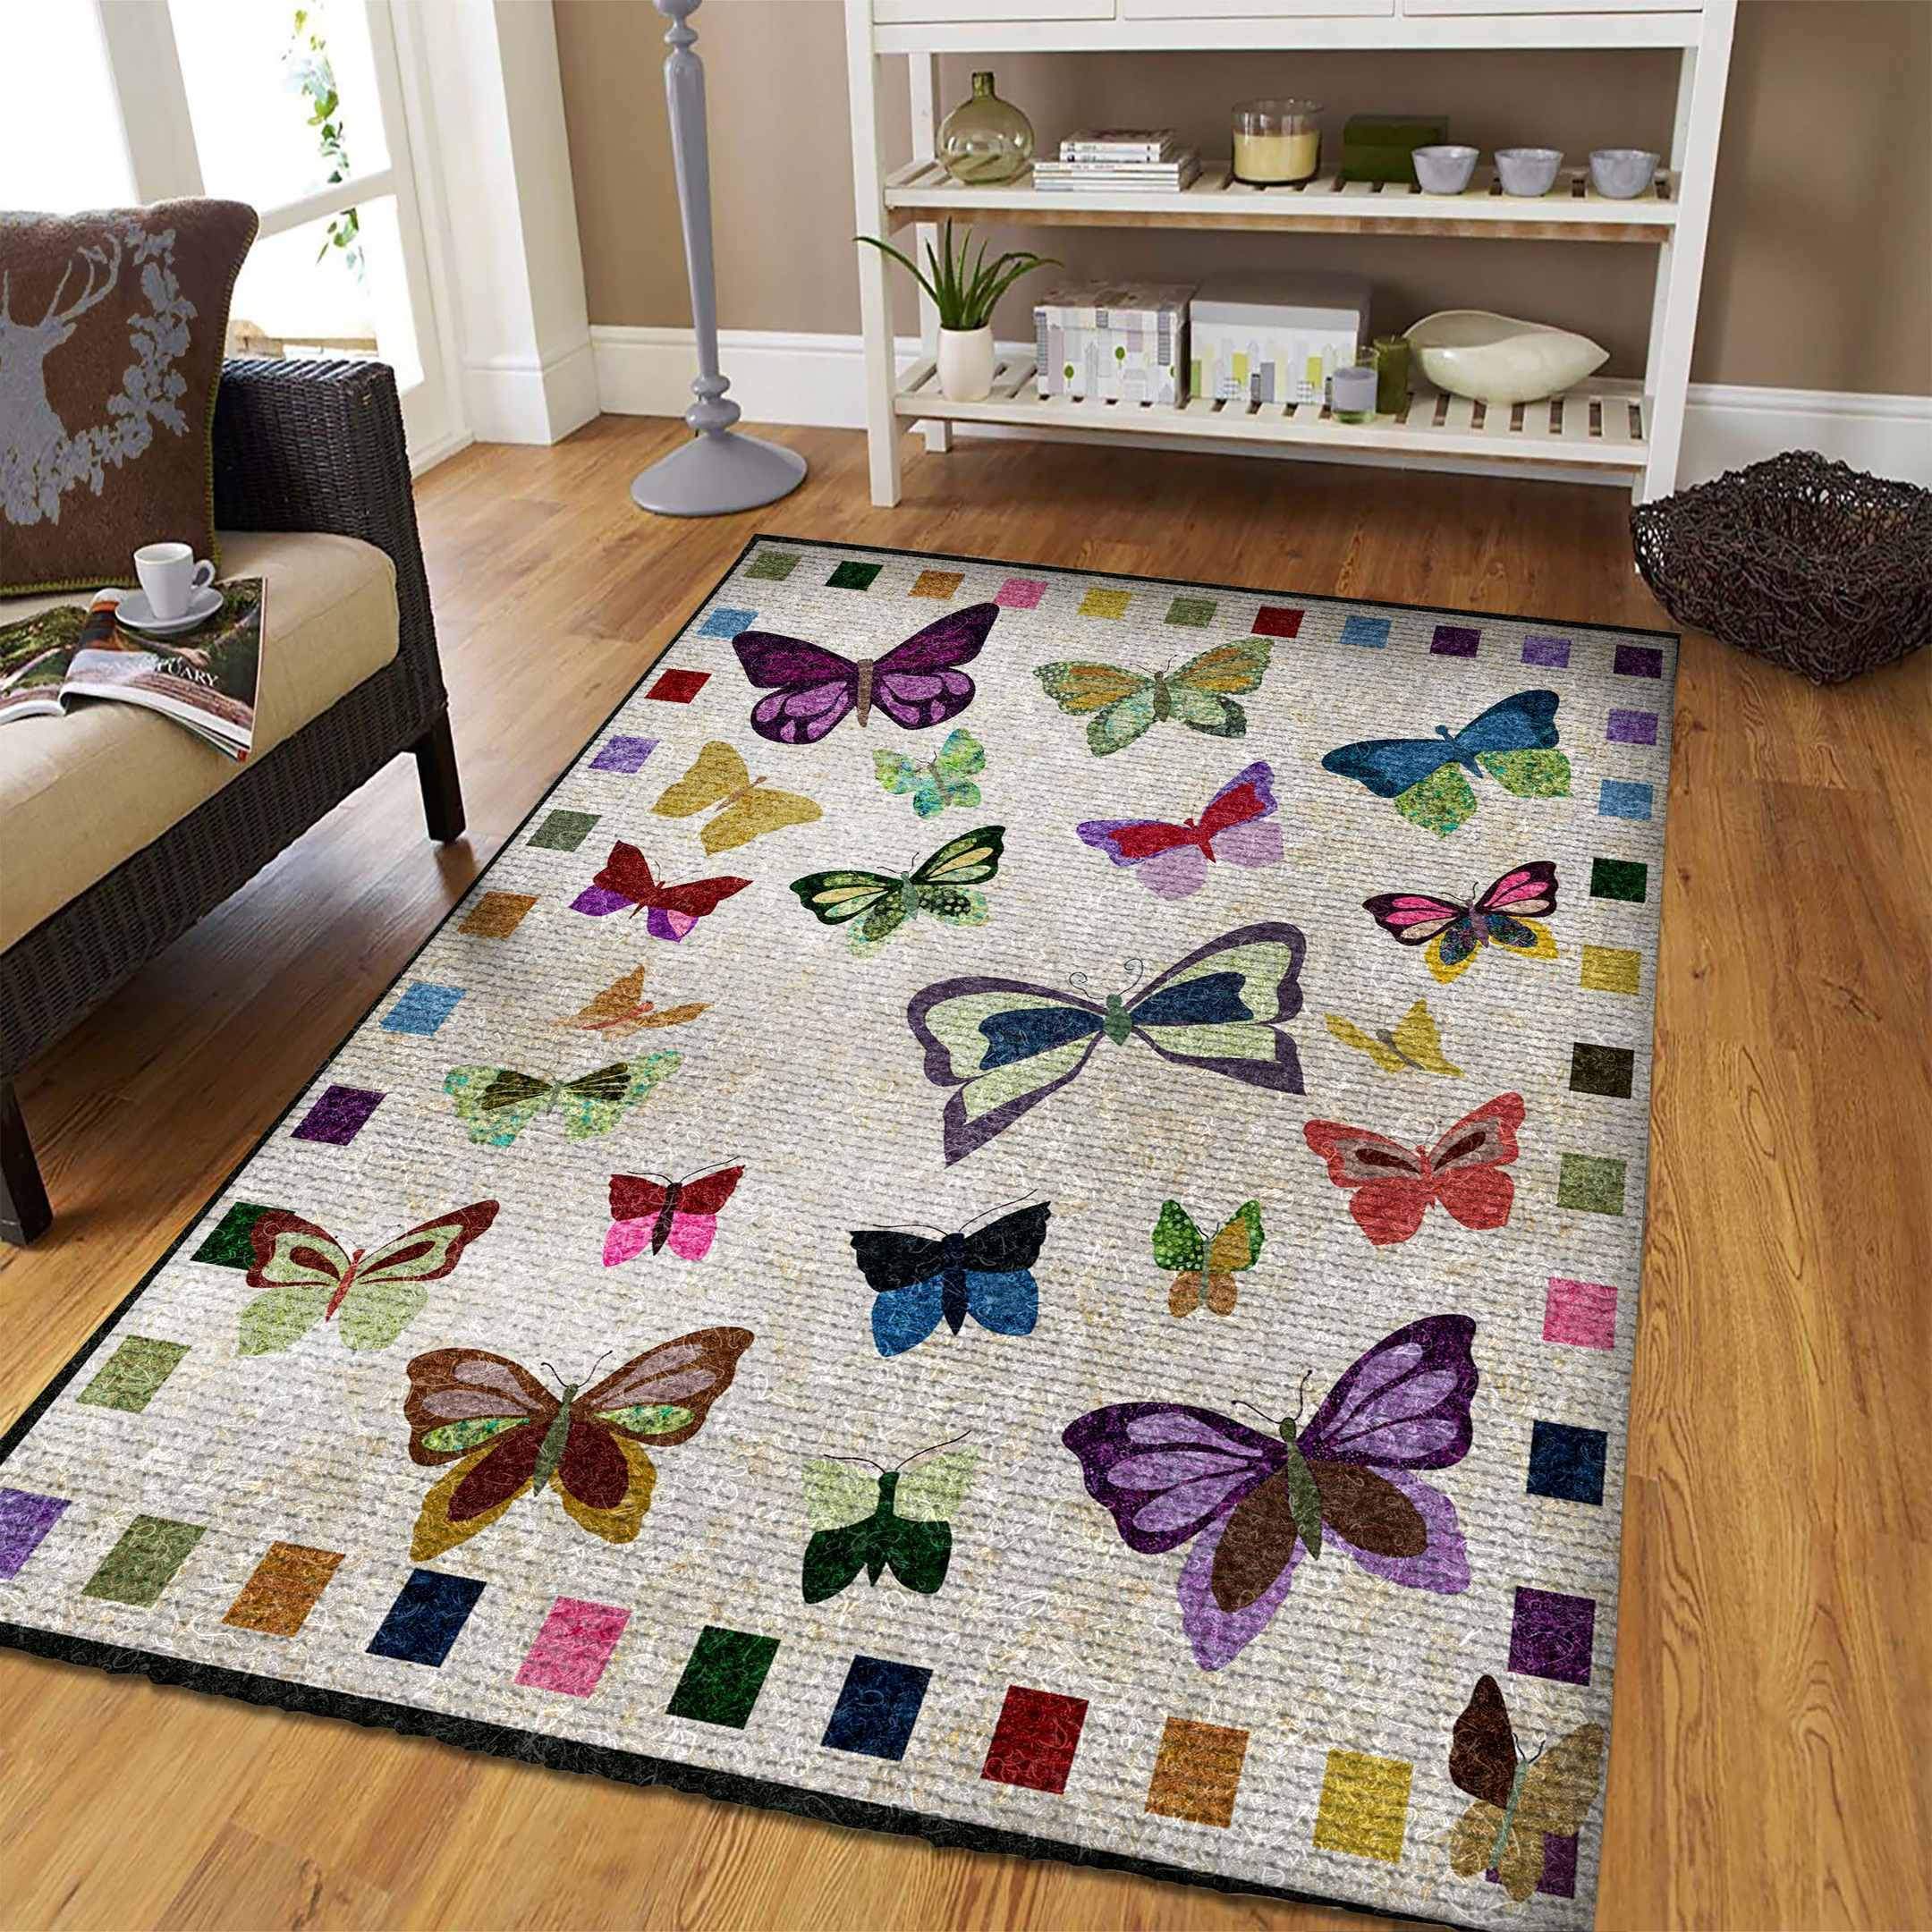 Butterfly Rug, Kitchen Carpet - Rug Decor